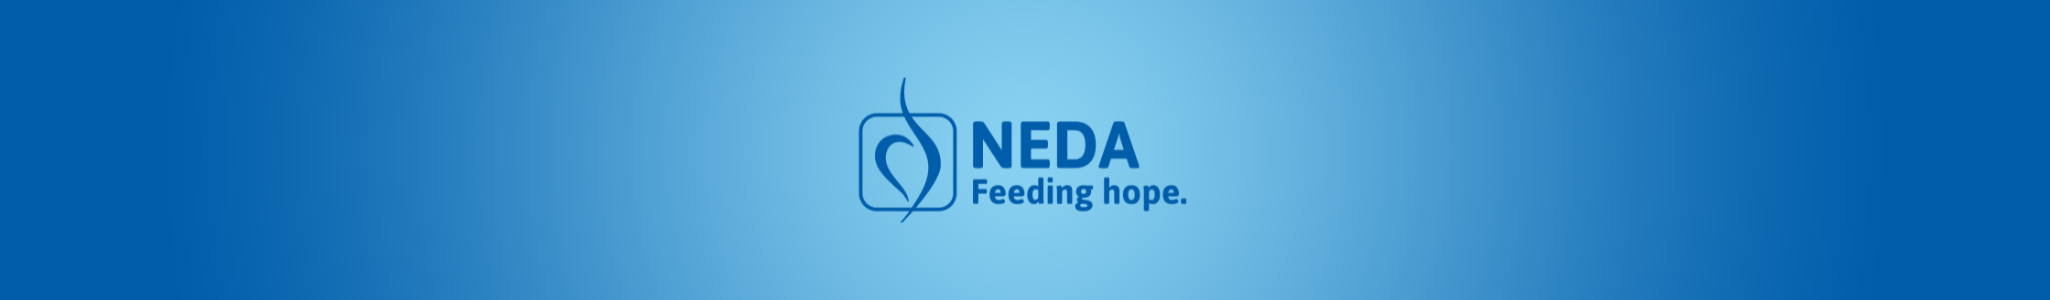 NEDA Feeding Hope